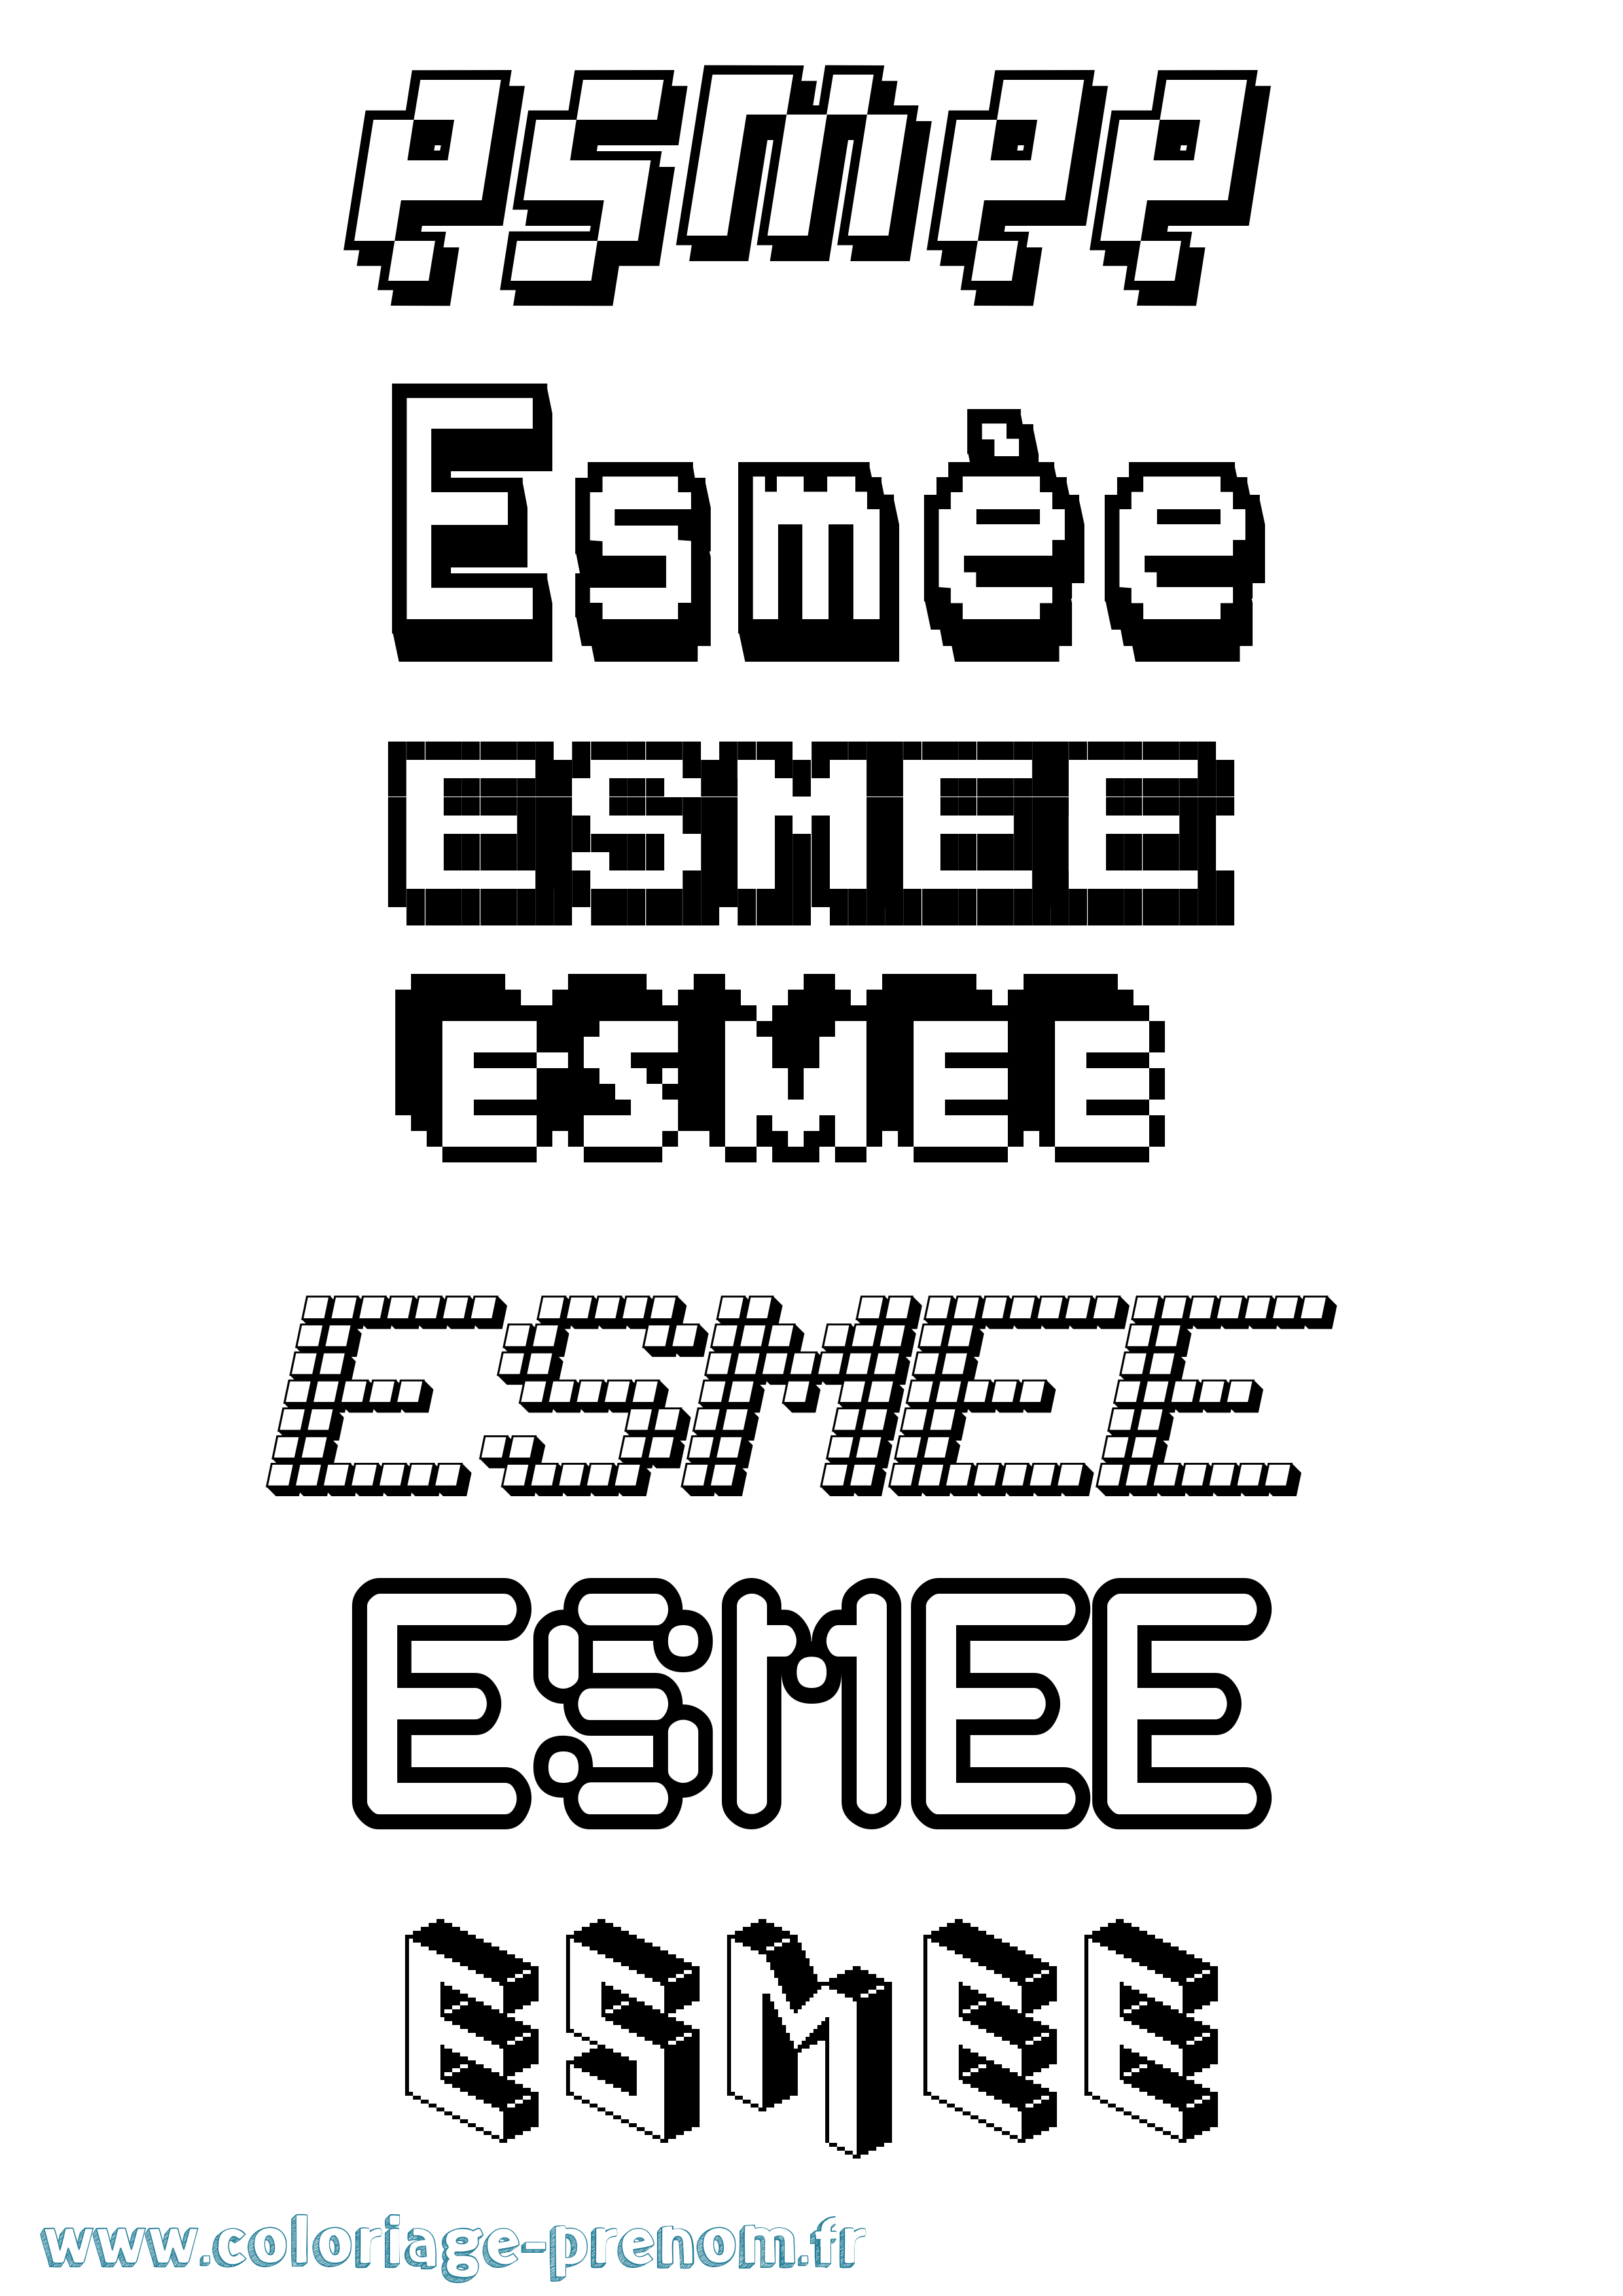 Coloriage prénom Esmée Pixel